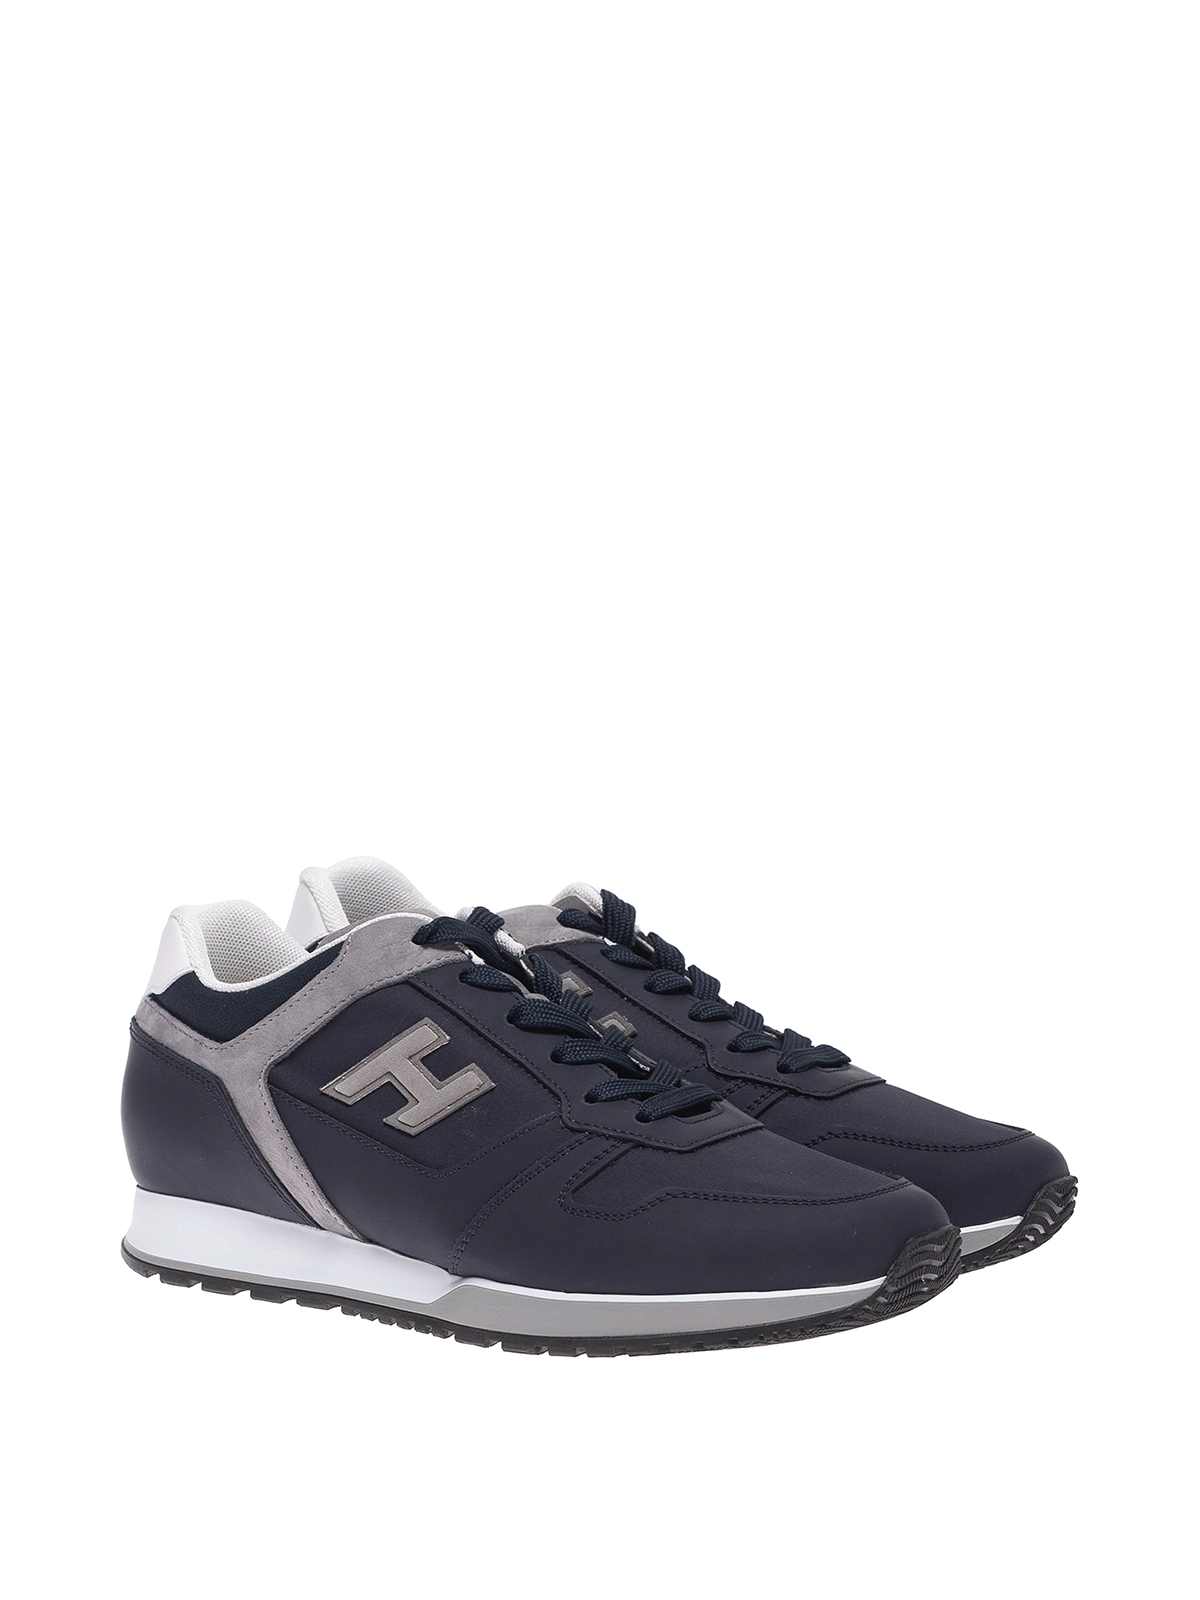 Trainers Hogan - H321 leather sneakers - HXM3210Y861N7K948F | iKRIX.com